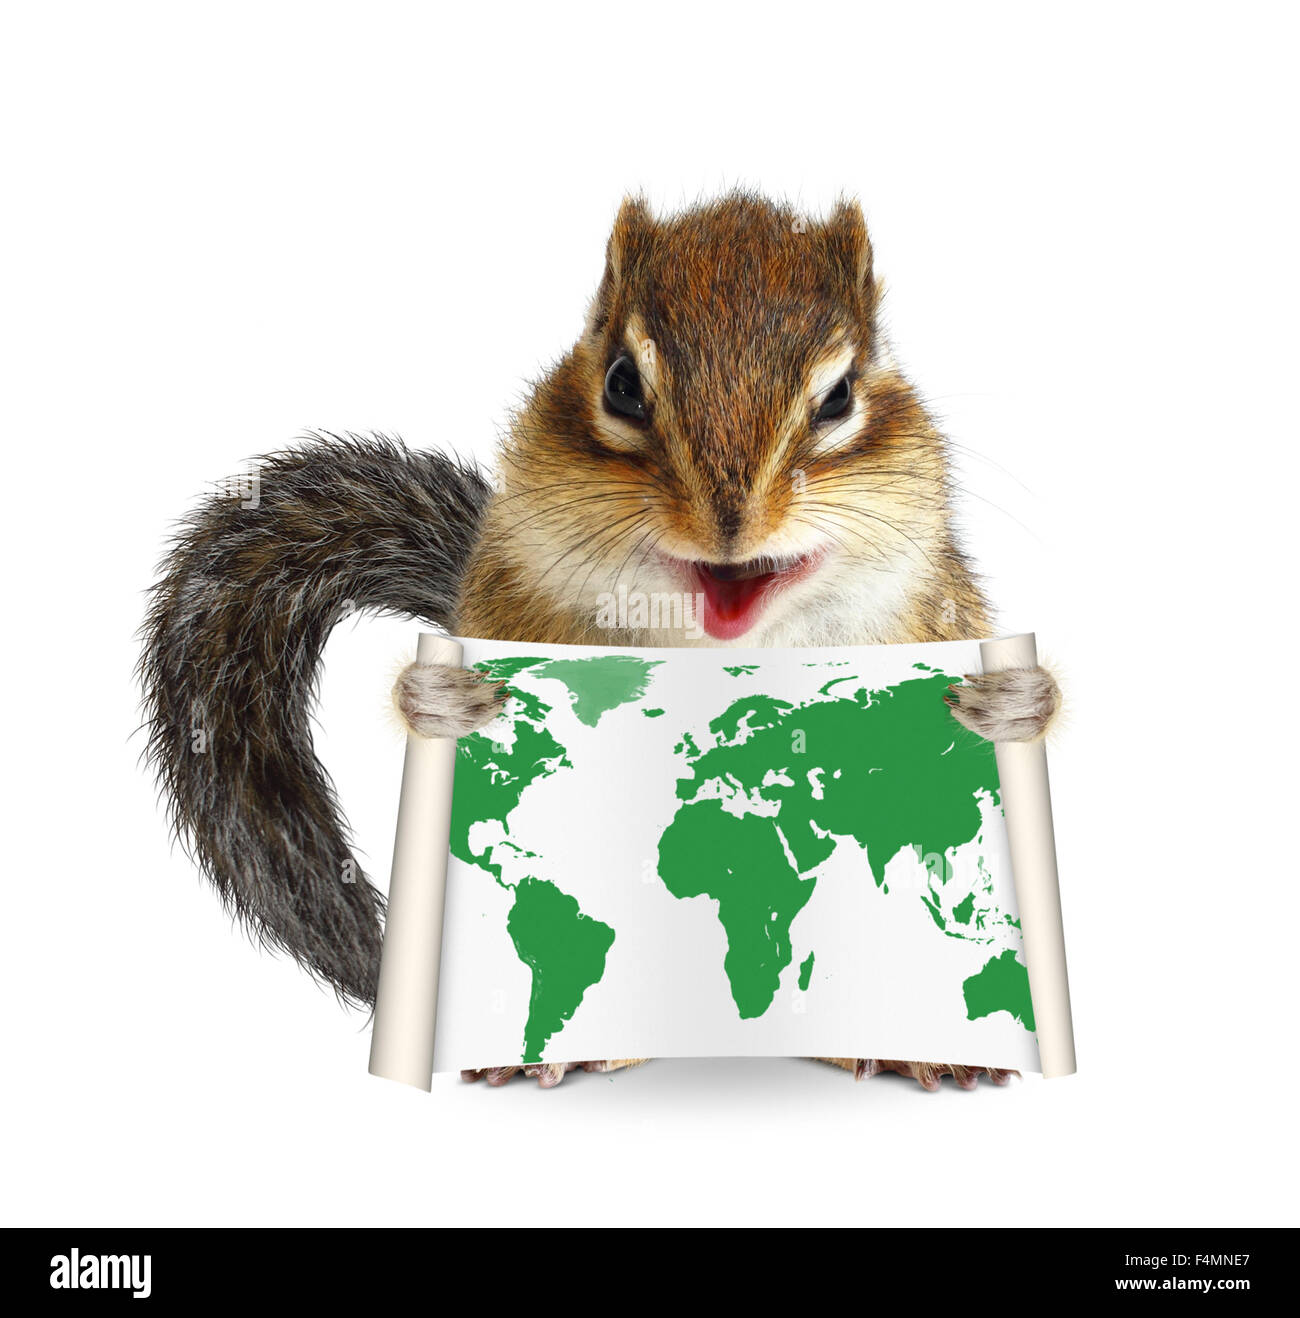 Funny animal chipmunk holding map on white background Stock Photo